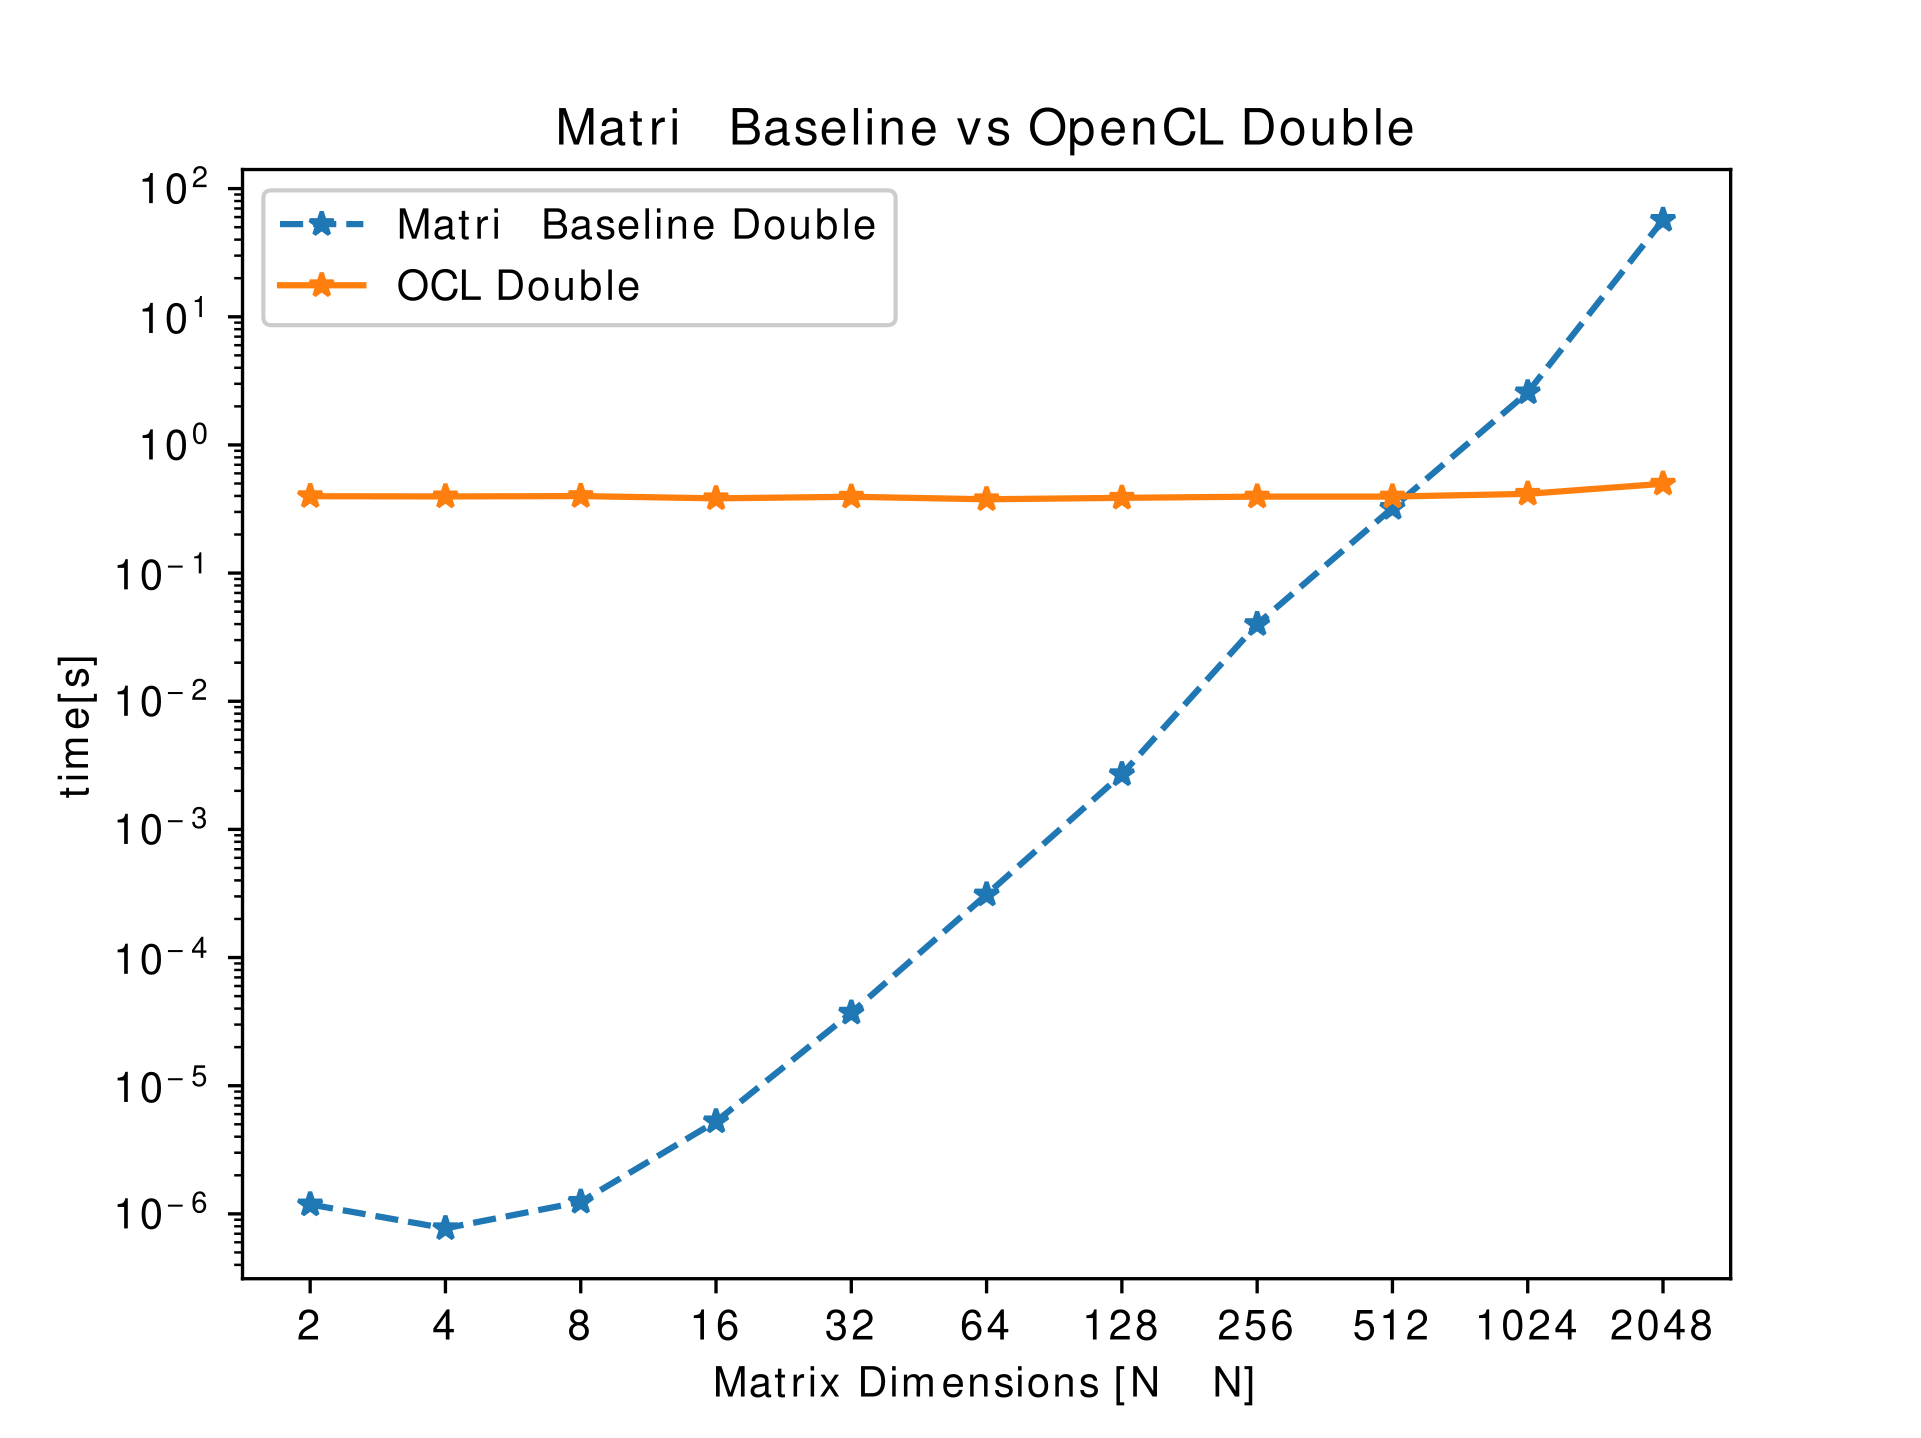 OCL Double Benchmarks